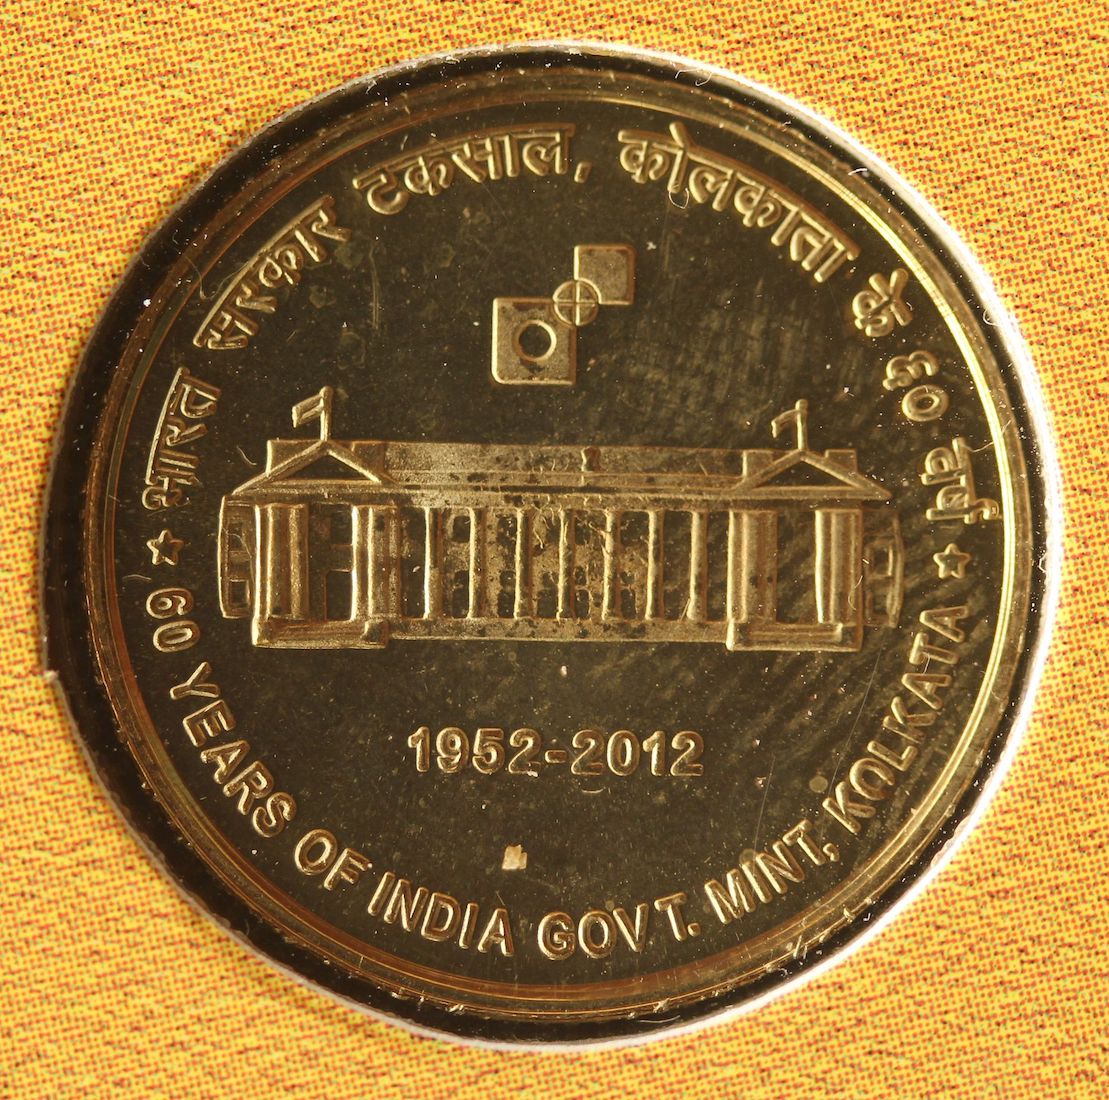 Special issue - Commemorative coins of India - commemorative coin, featured, Nazarana, nisar, Numismatics